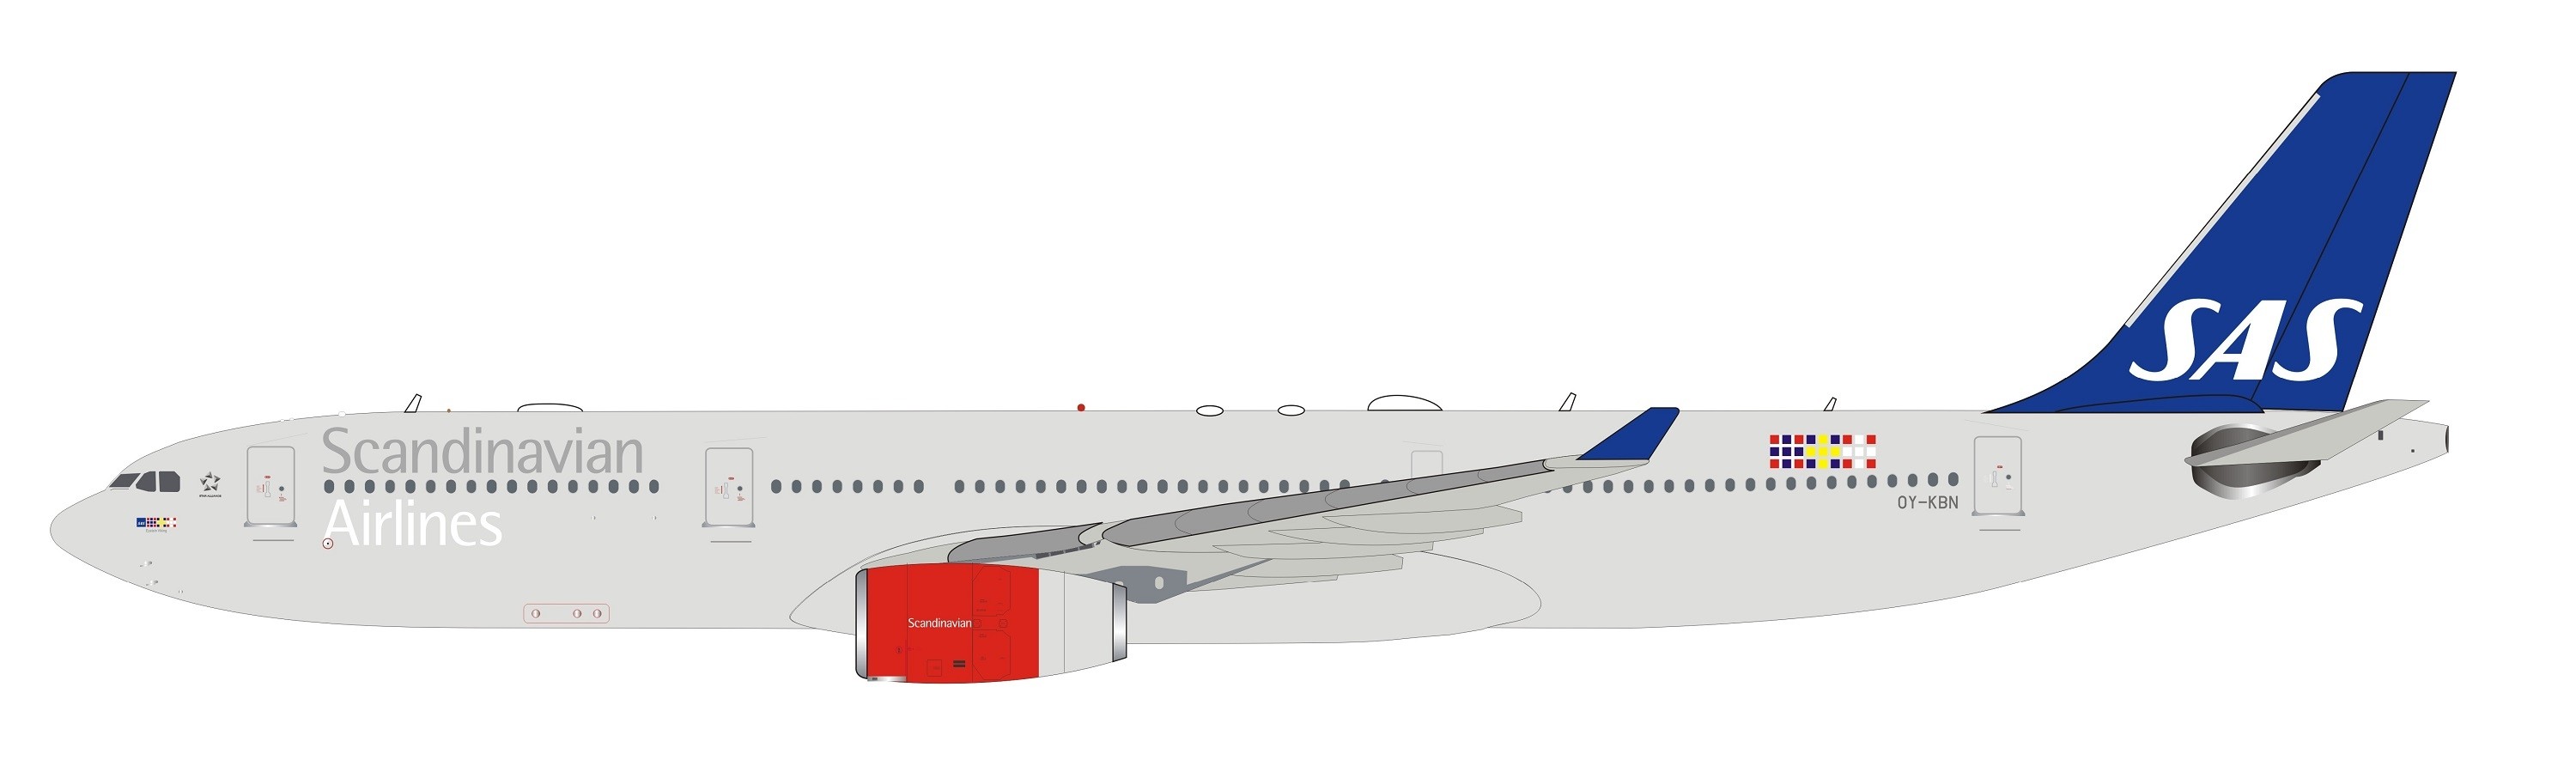 SAS Scandinavian Airlines Airbus A330-300 1:200 Hogan Wings 0175 A330 Fahrwerk 